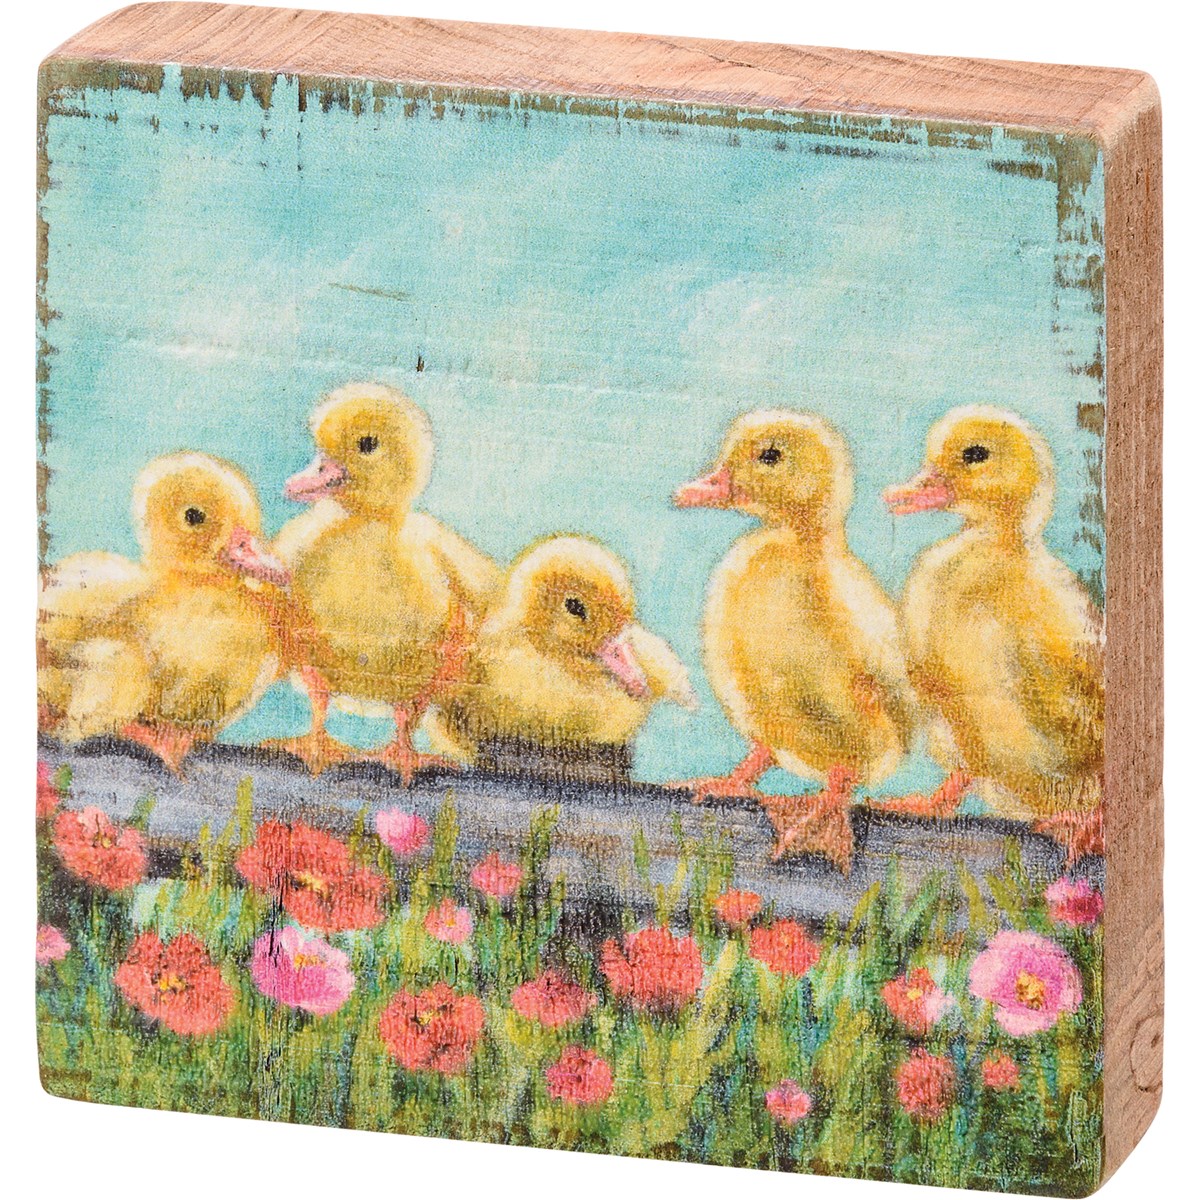 Block Sign - Ducklings - 3.50" x 3.50" x 1" - Wood